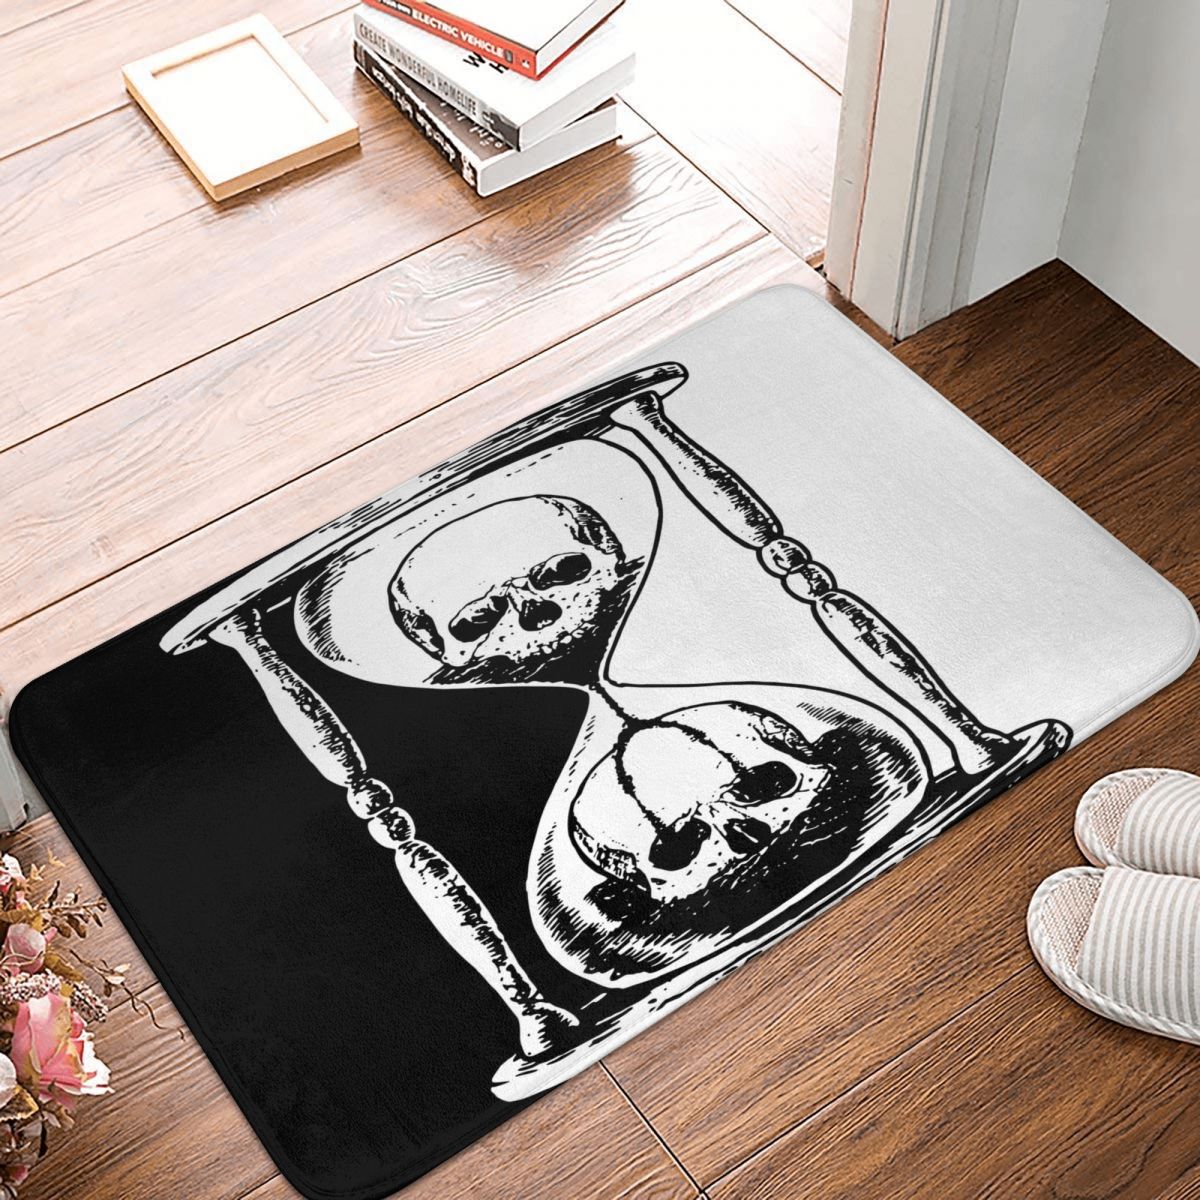 Unus Annus Skull Merch Doormat Bathroom Printed Polyeste Living Room Home Mat Death Horror Dustproof Floor - Unus Annus Store